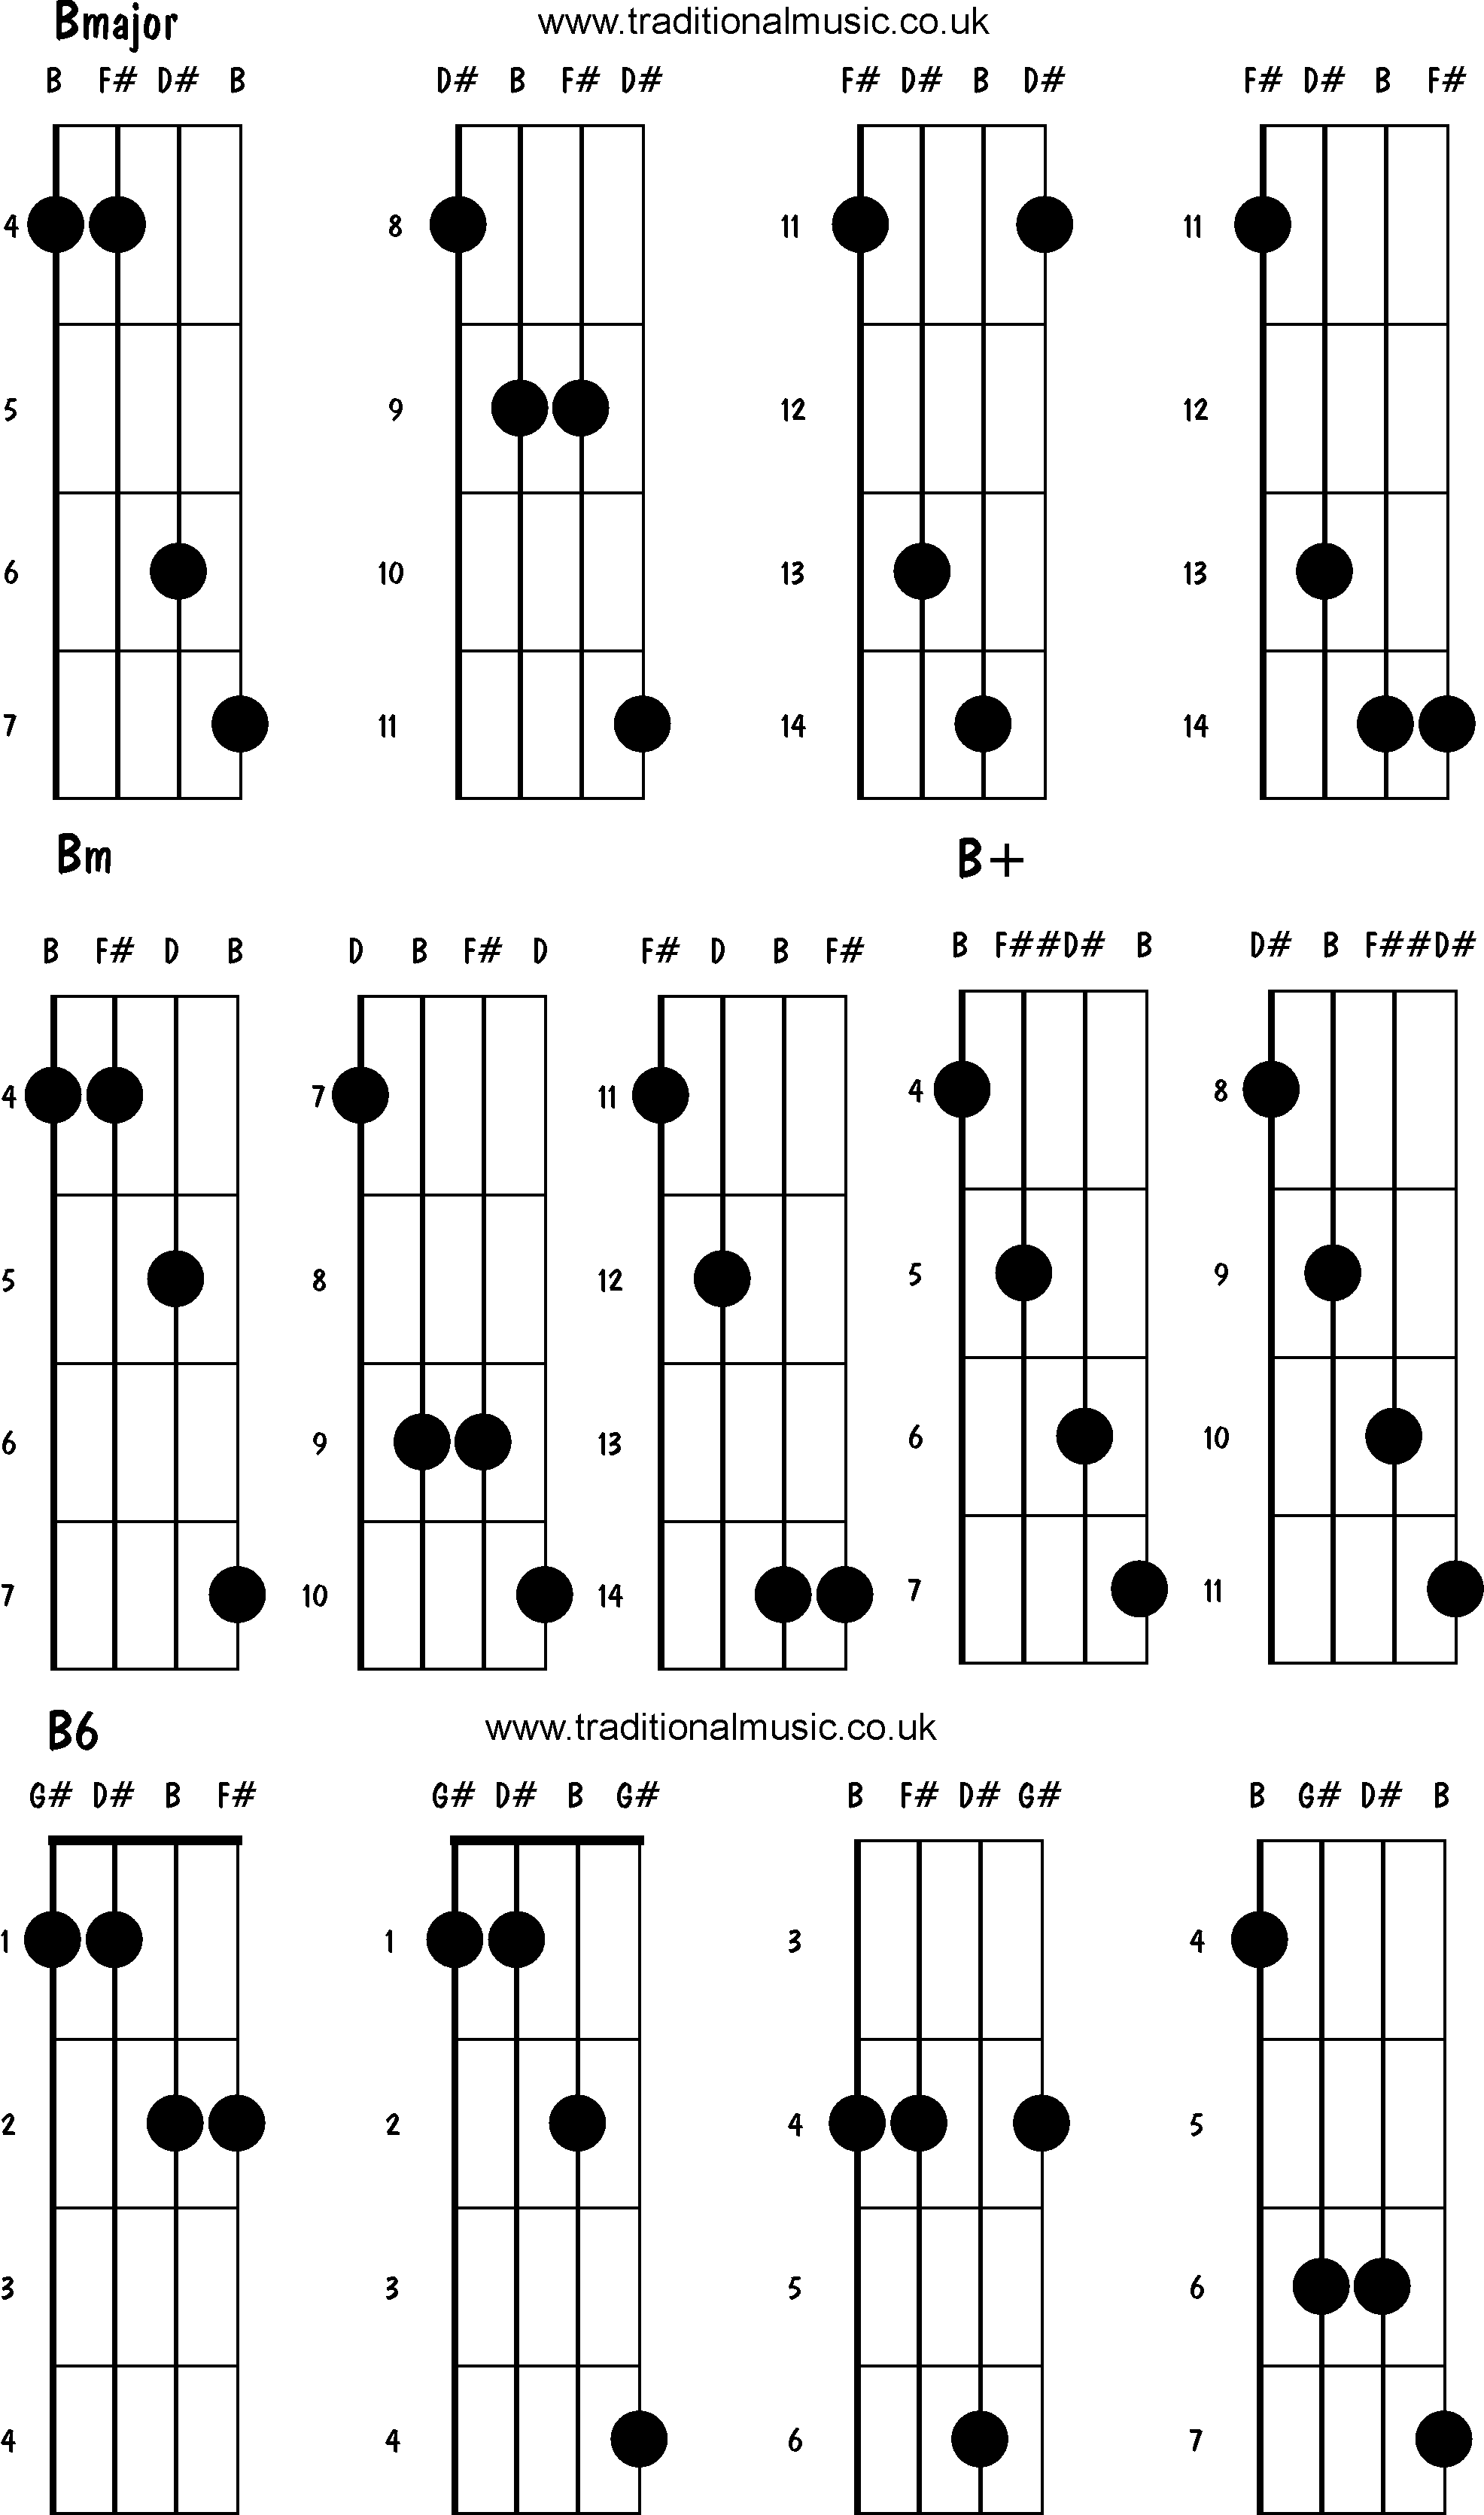 Advanced mandolin chords:Bmajor, Bm, B6